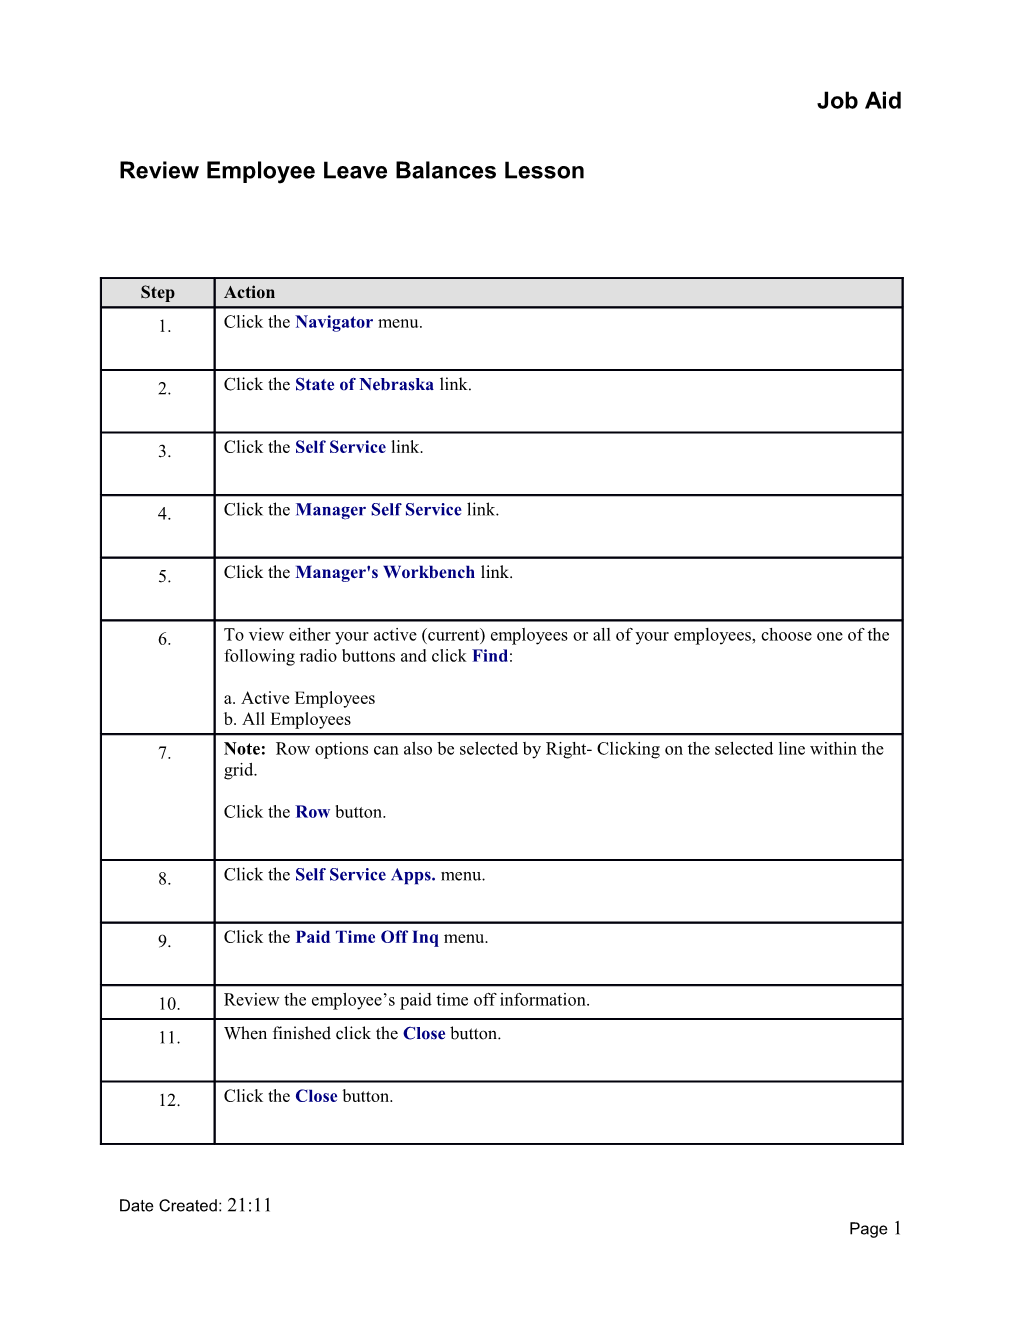 Review Employee Leave Balances Lesson